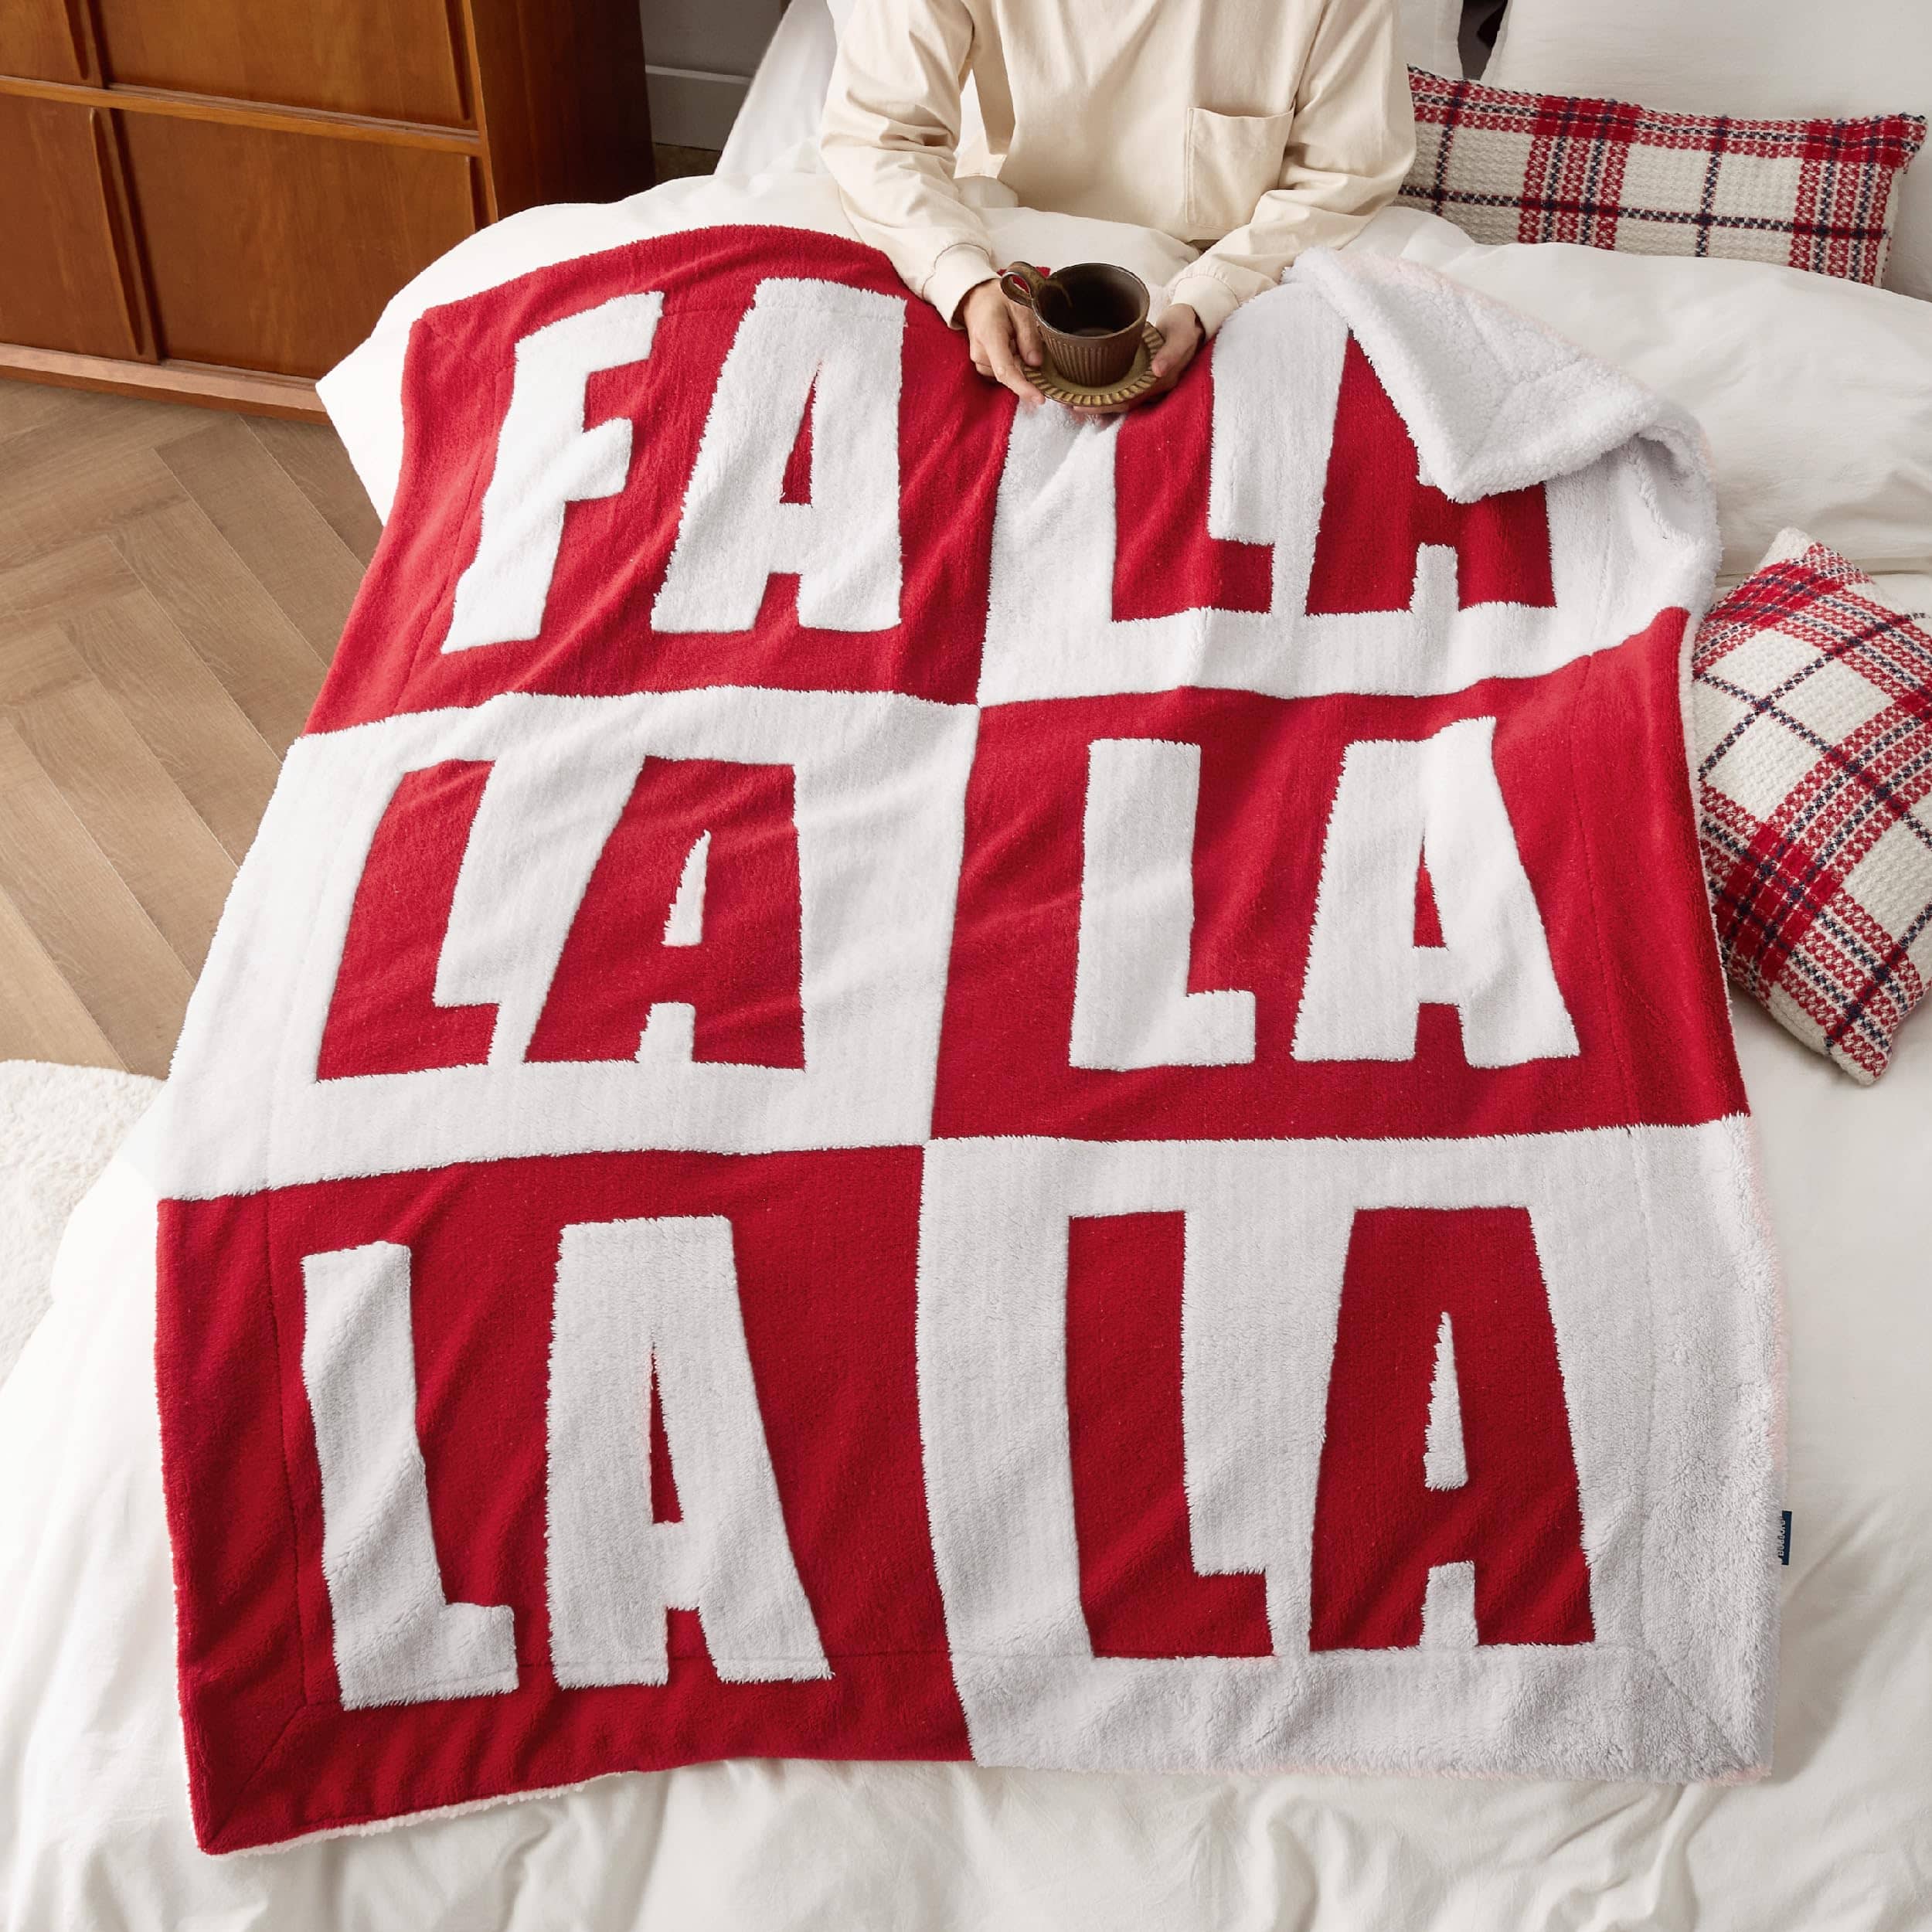 Bedsure Christmas Falala Red Sherpa Throw Blanket